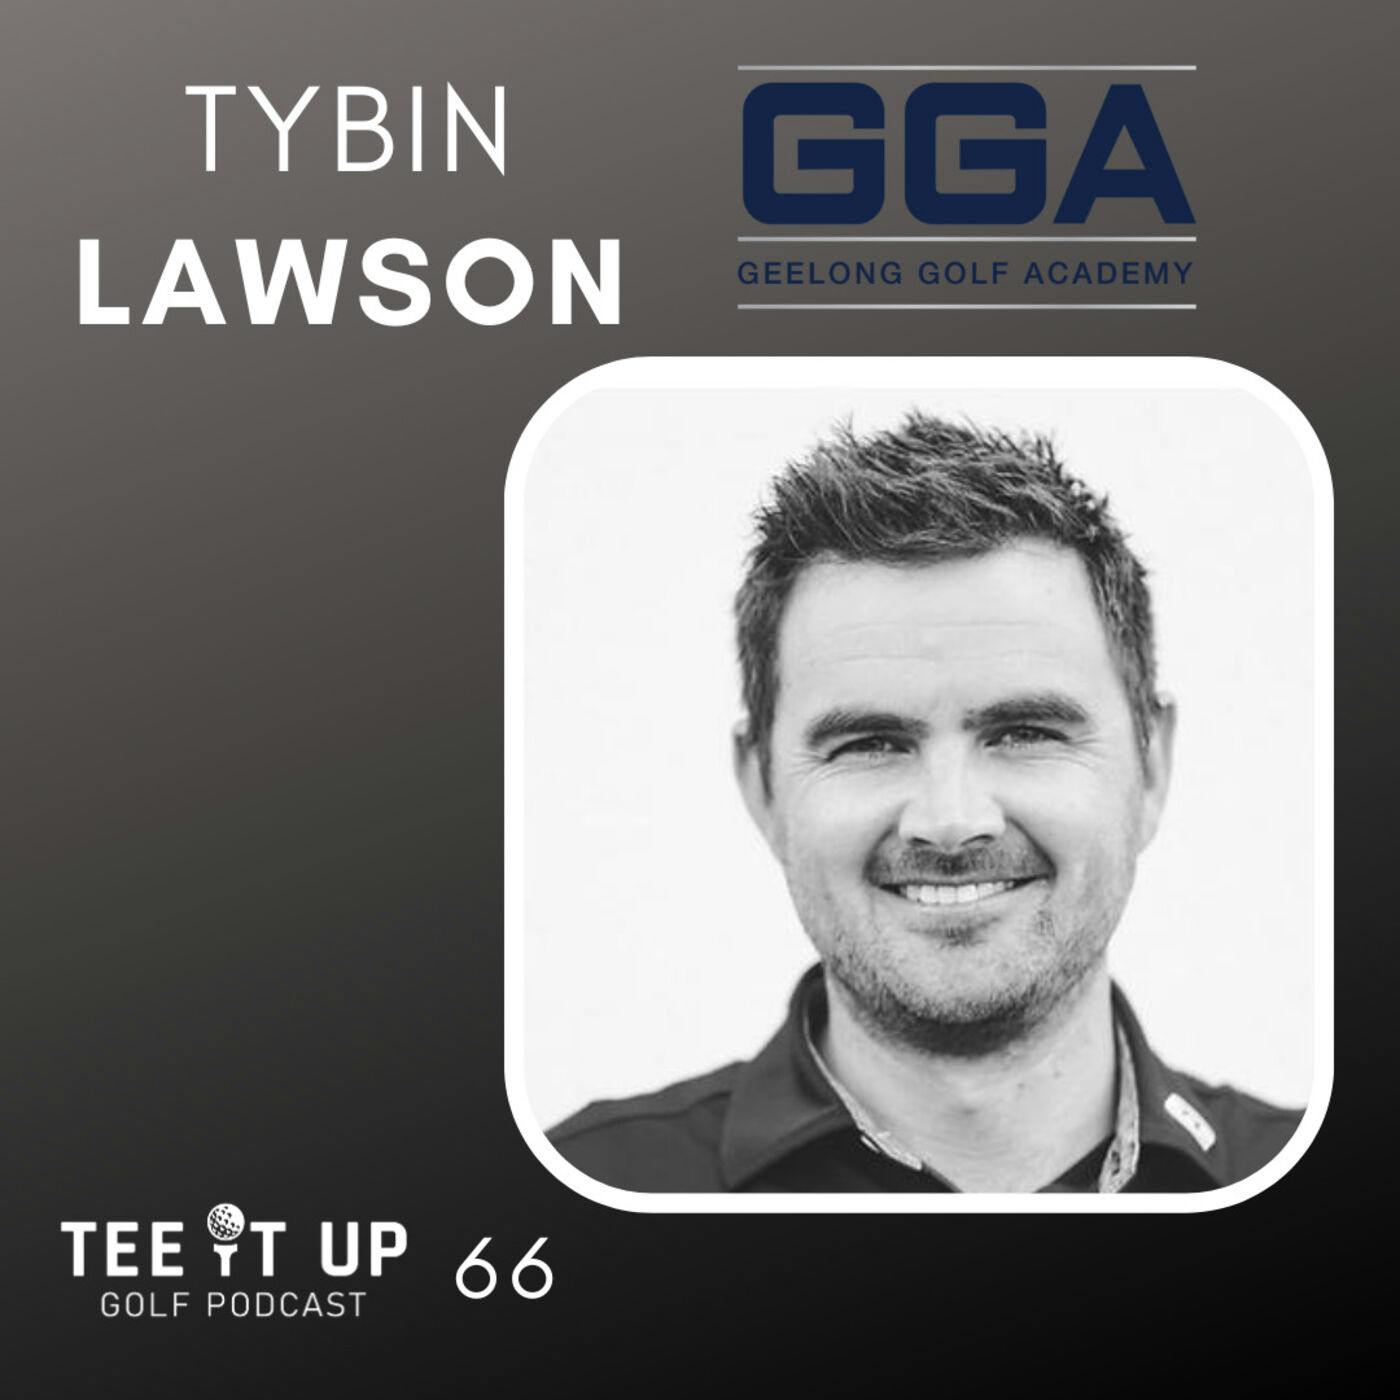 Tybin Lawson - GGA , MyGolf Deliverer of the Year